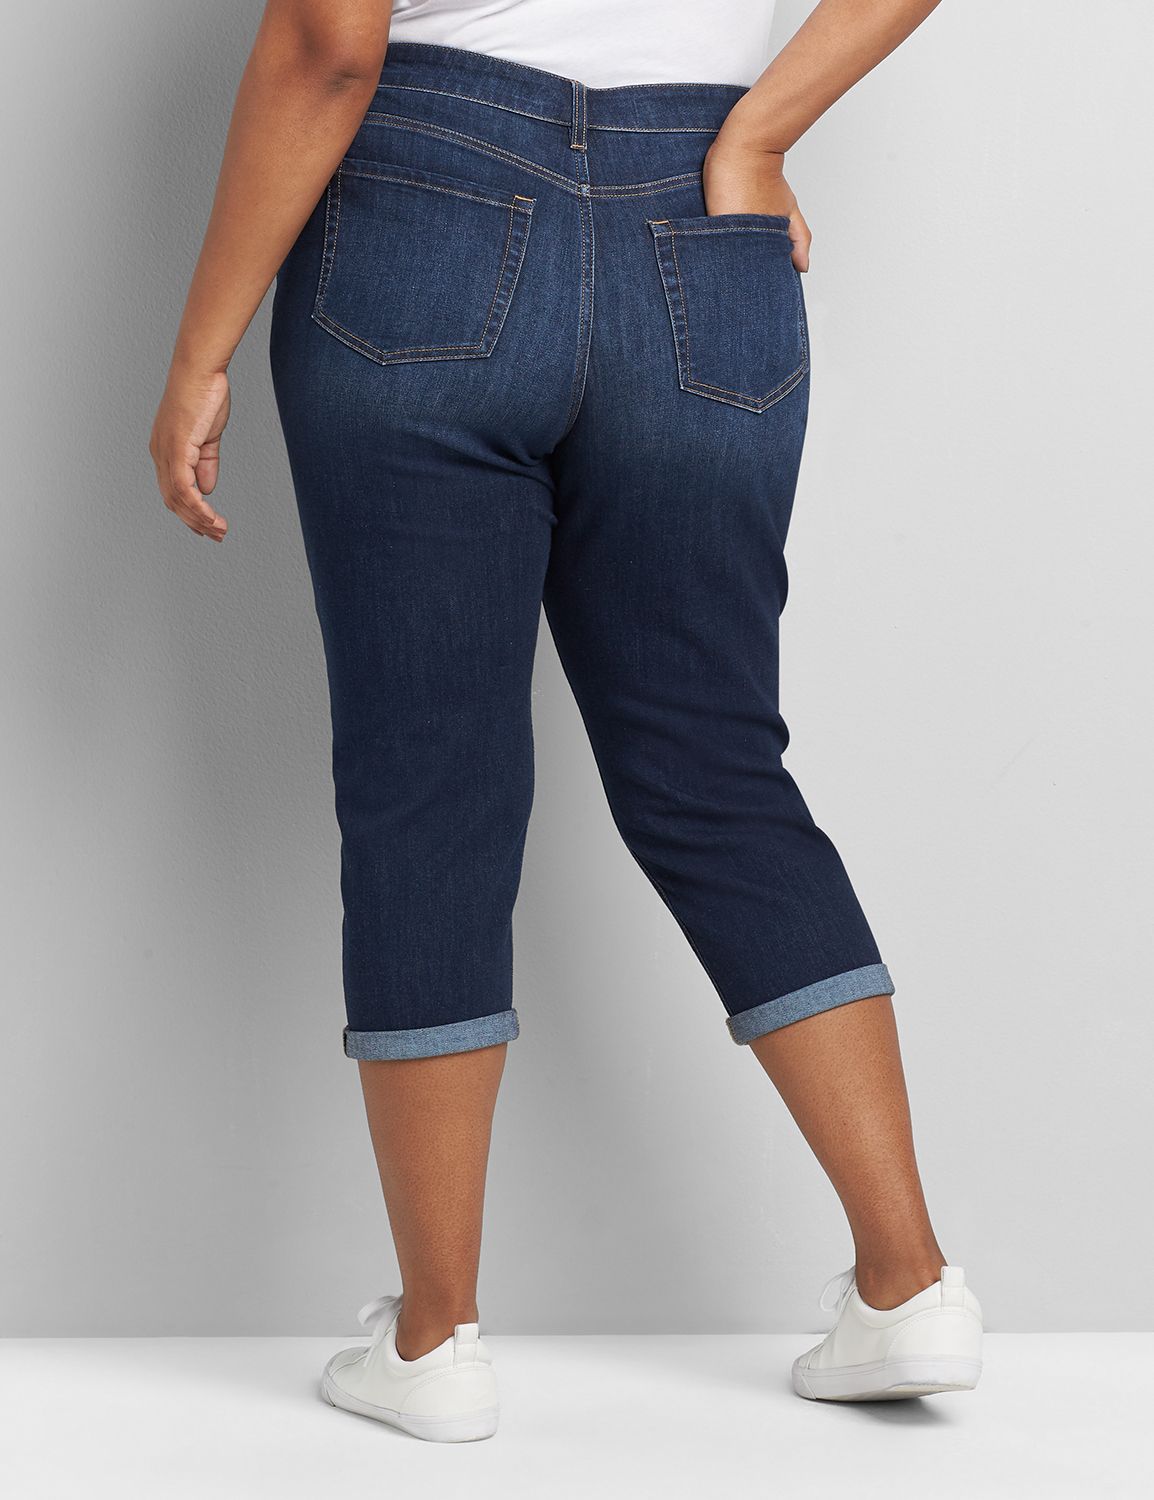 PS553-05-20 Women Plus Size Capri Jeans - Dark Blue Mark - Size 20